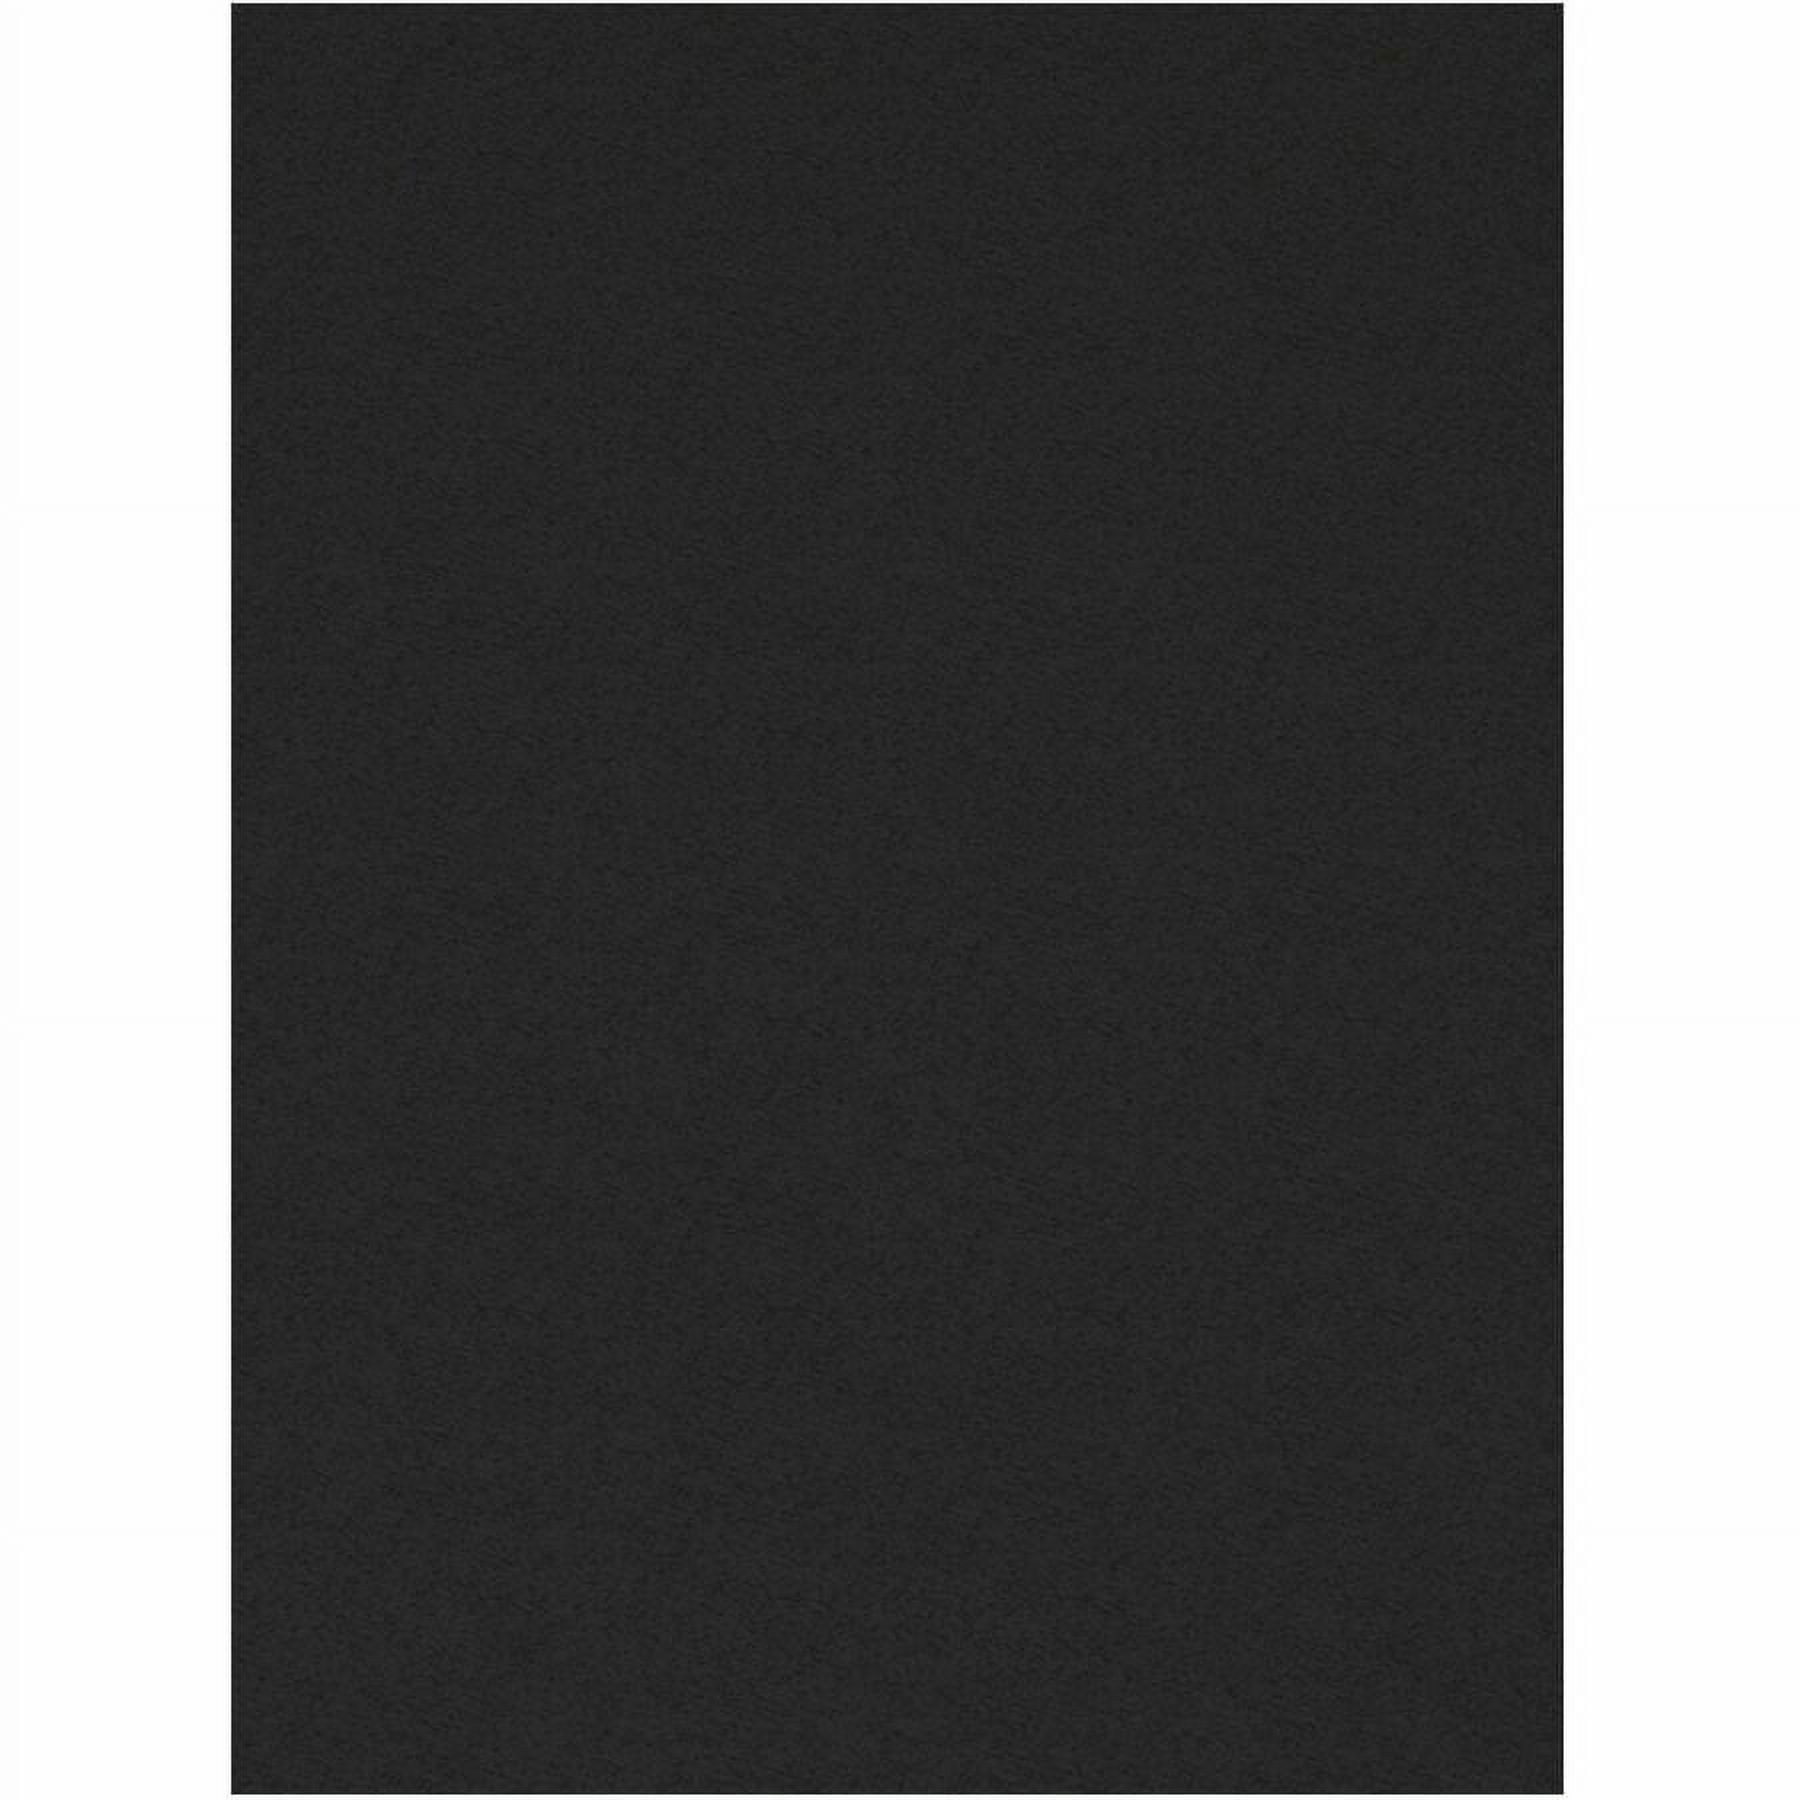 Pacon Tru-Ray Construction Paper - 9 x 12, Black, 50 Sheets